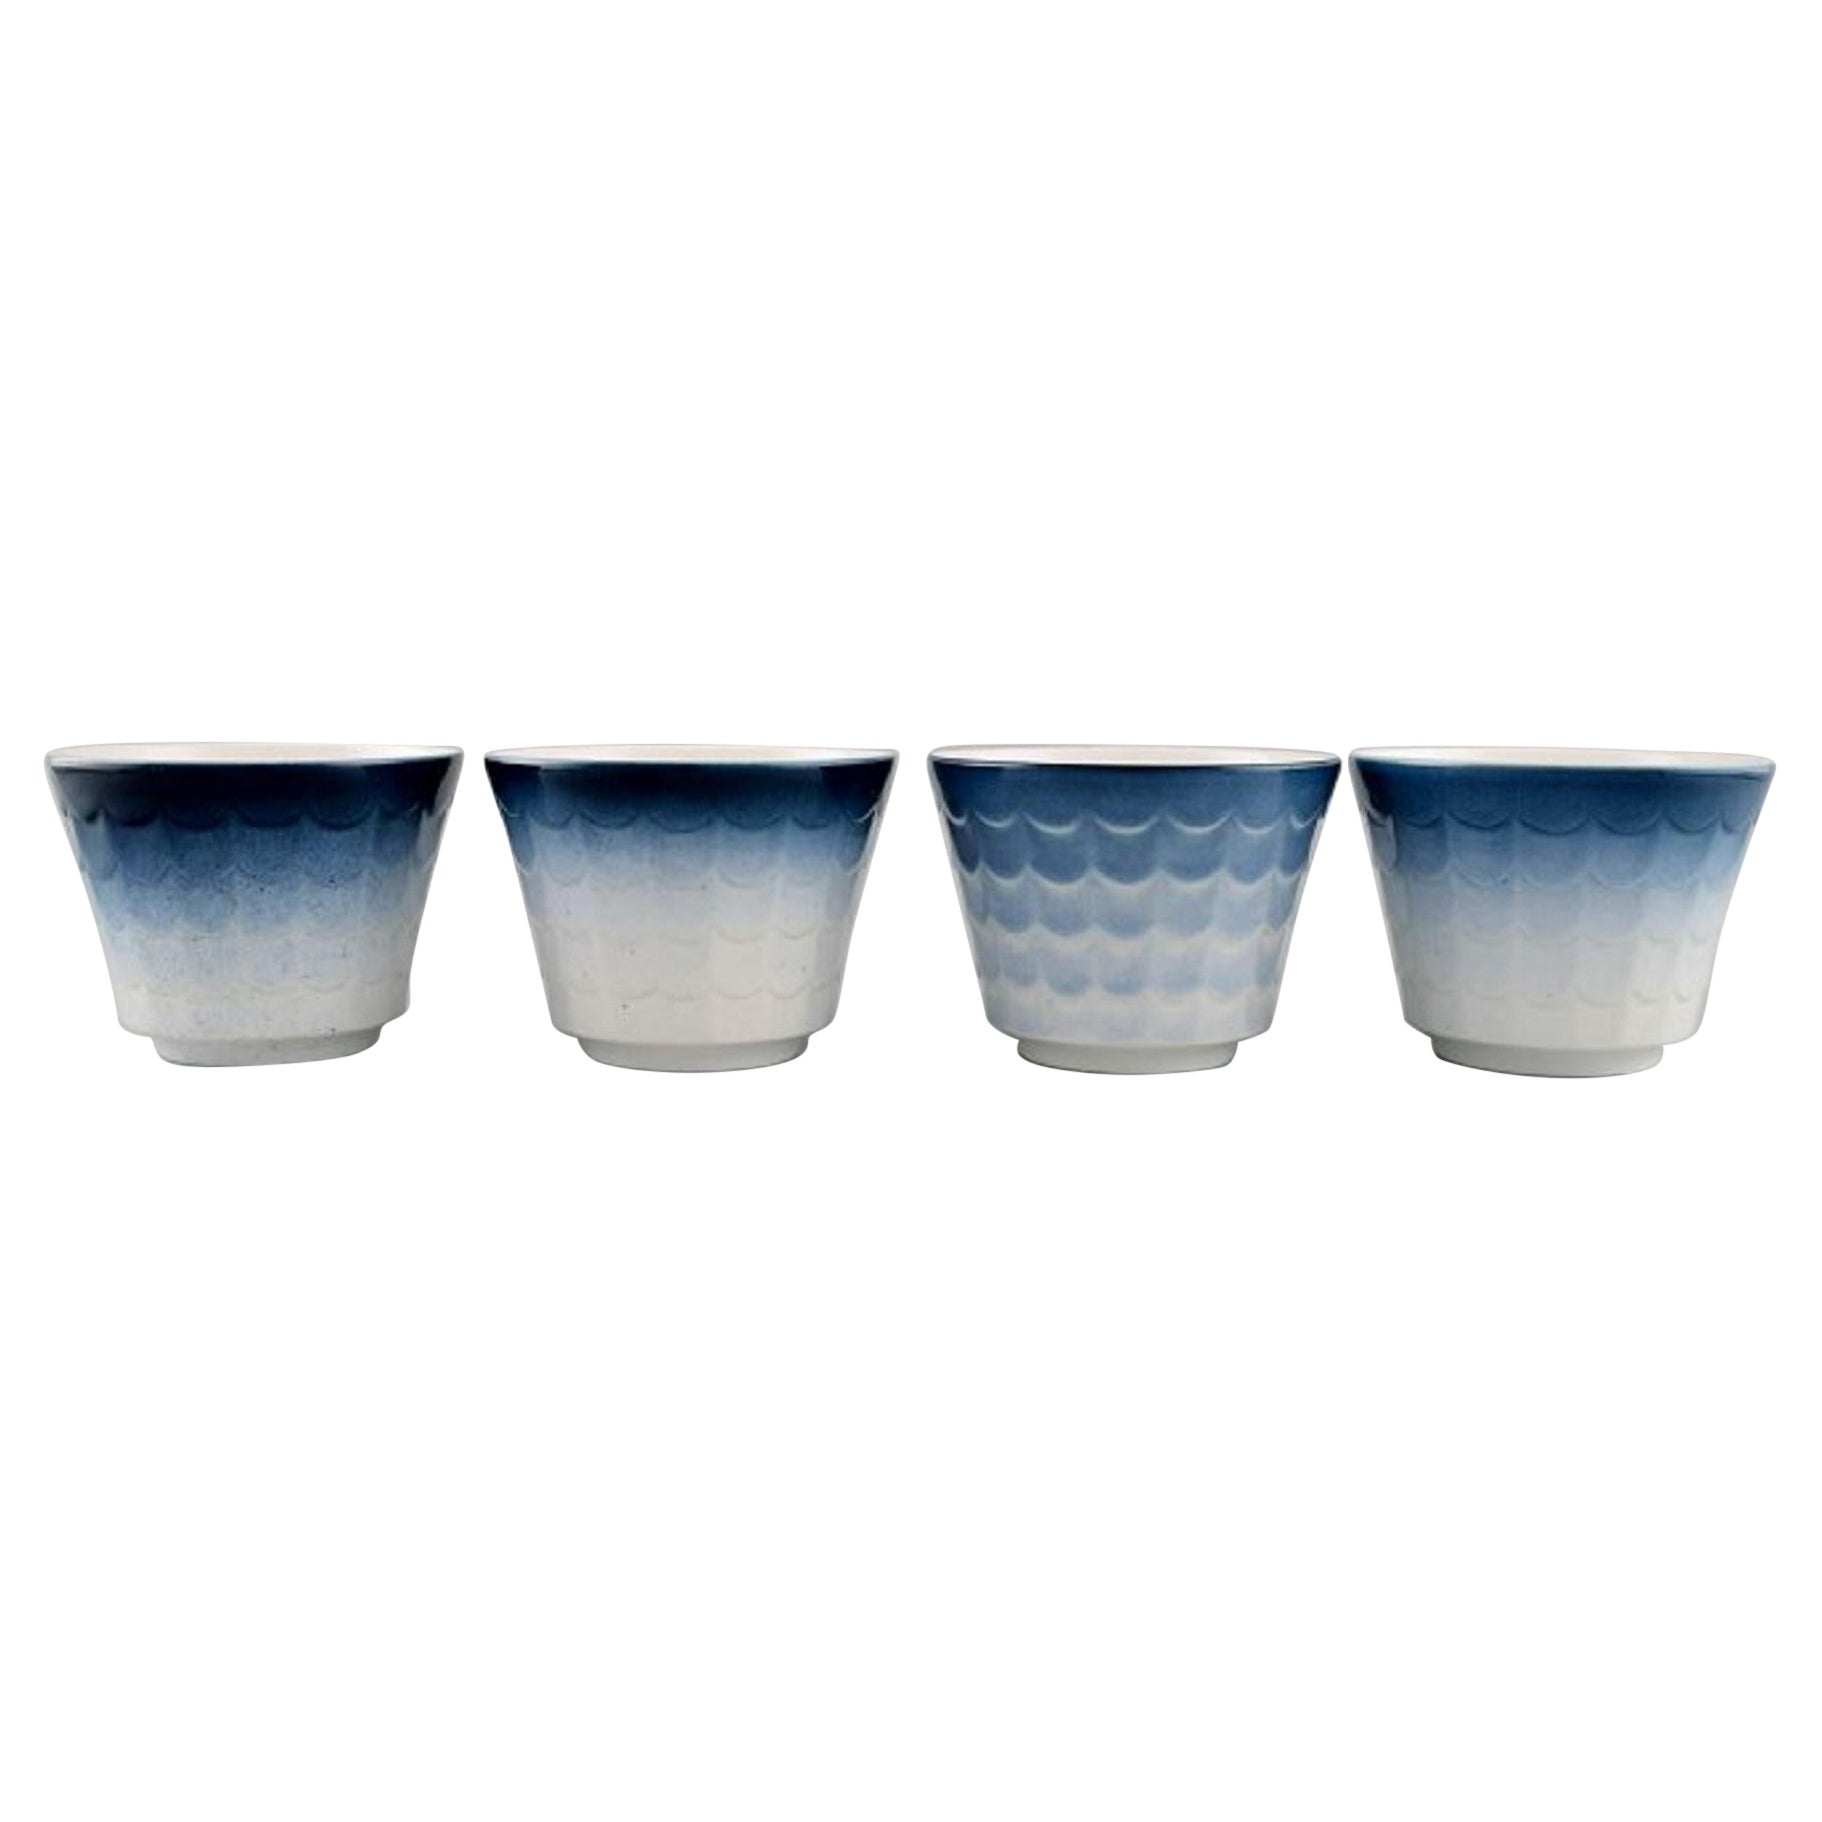 Wilhelm Kåge for Gustavsberg, Four Flower Pot Covers in Porcelain For Sale